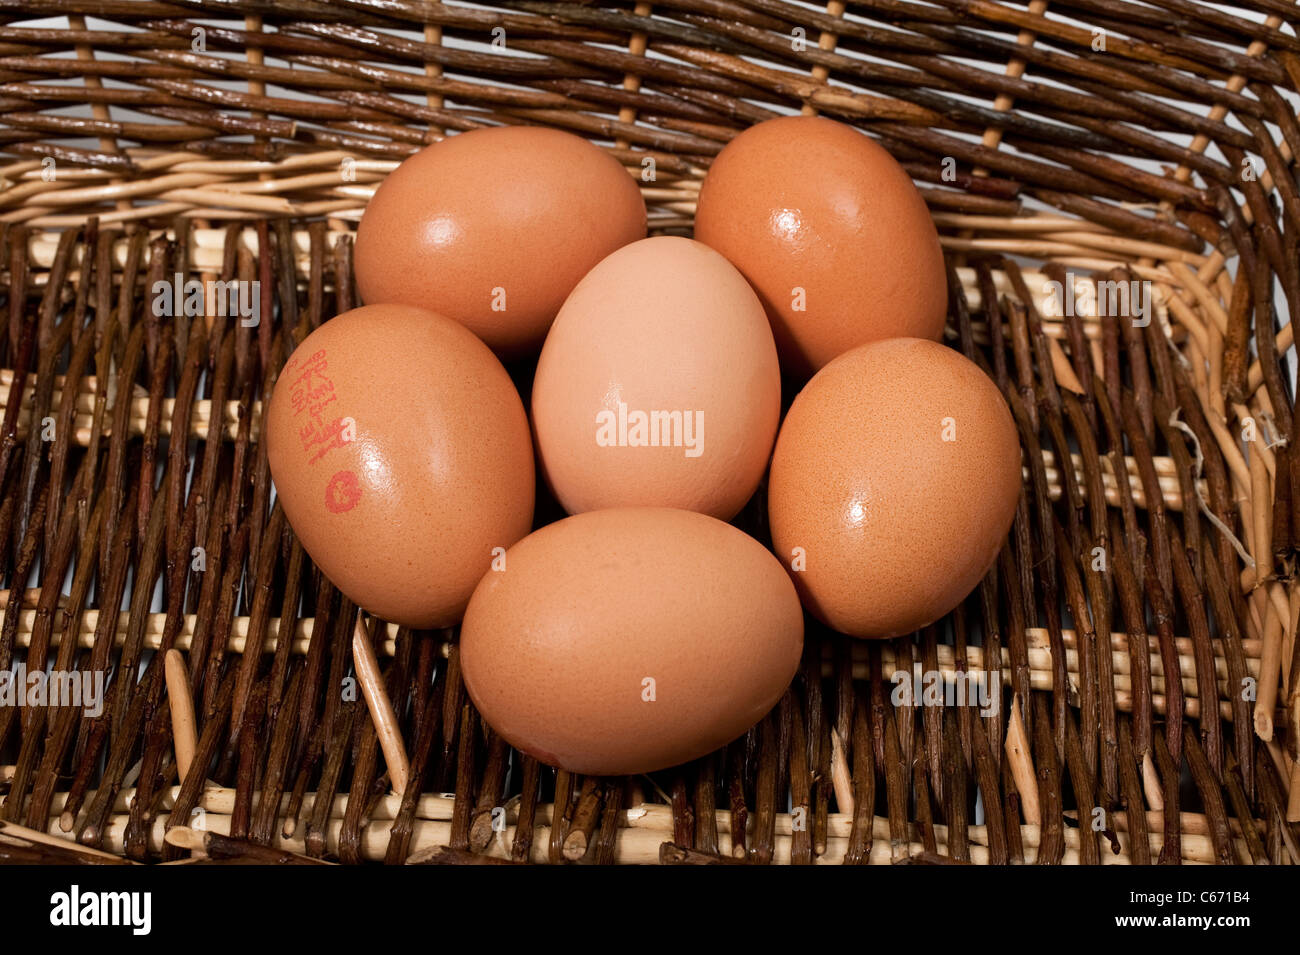 Six, half a dozen, hens eggs in a basket Stock Photo